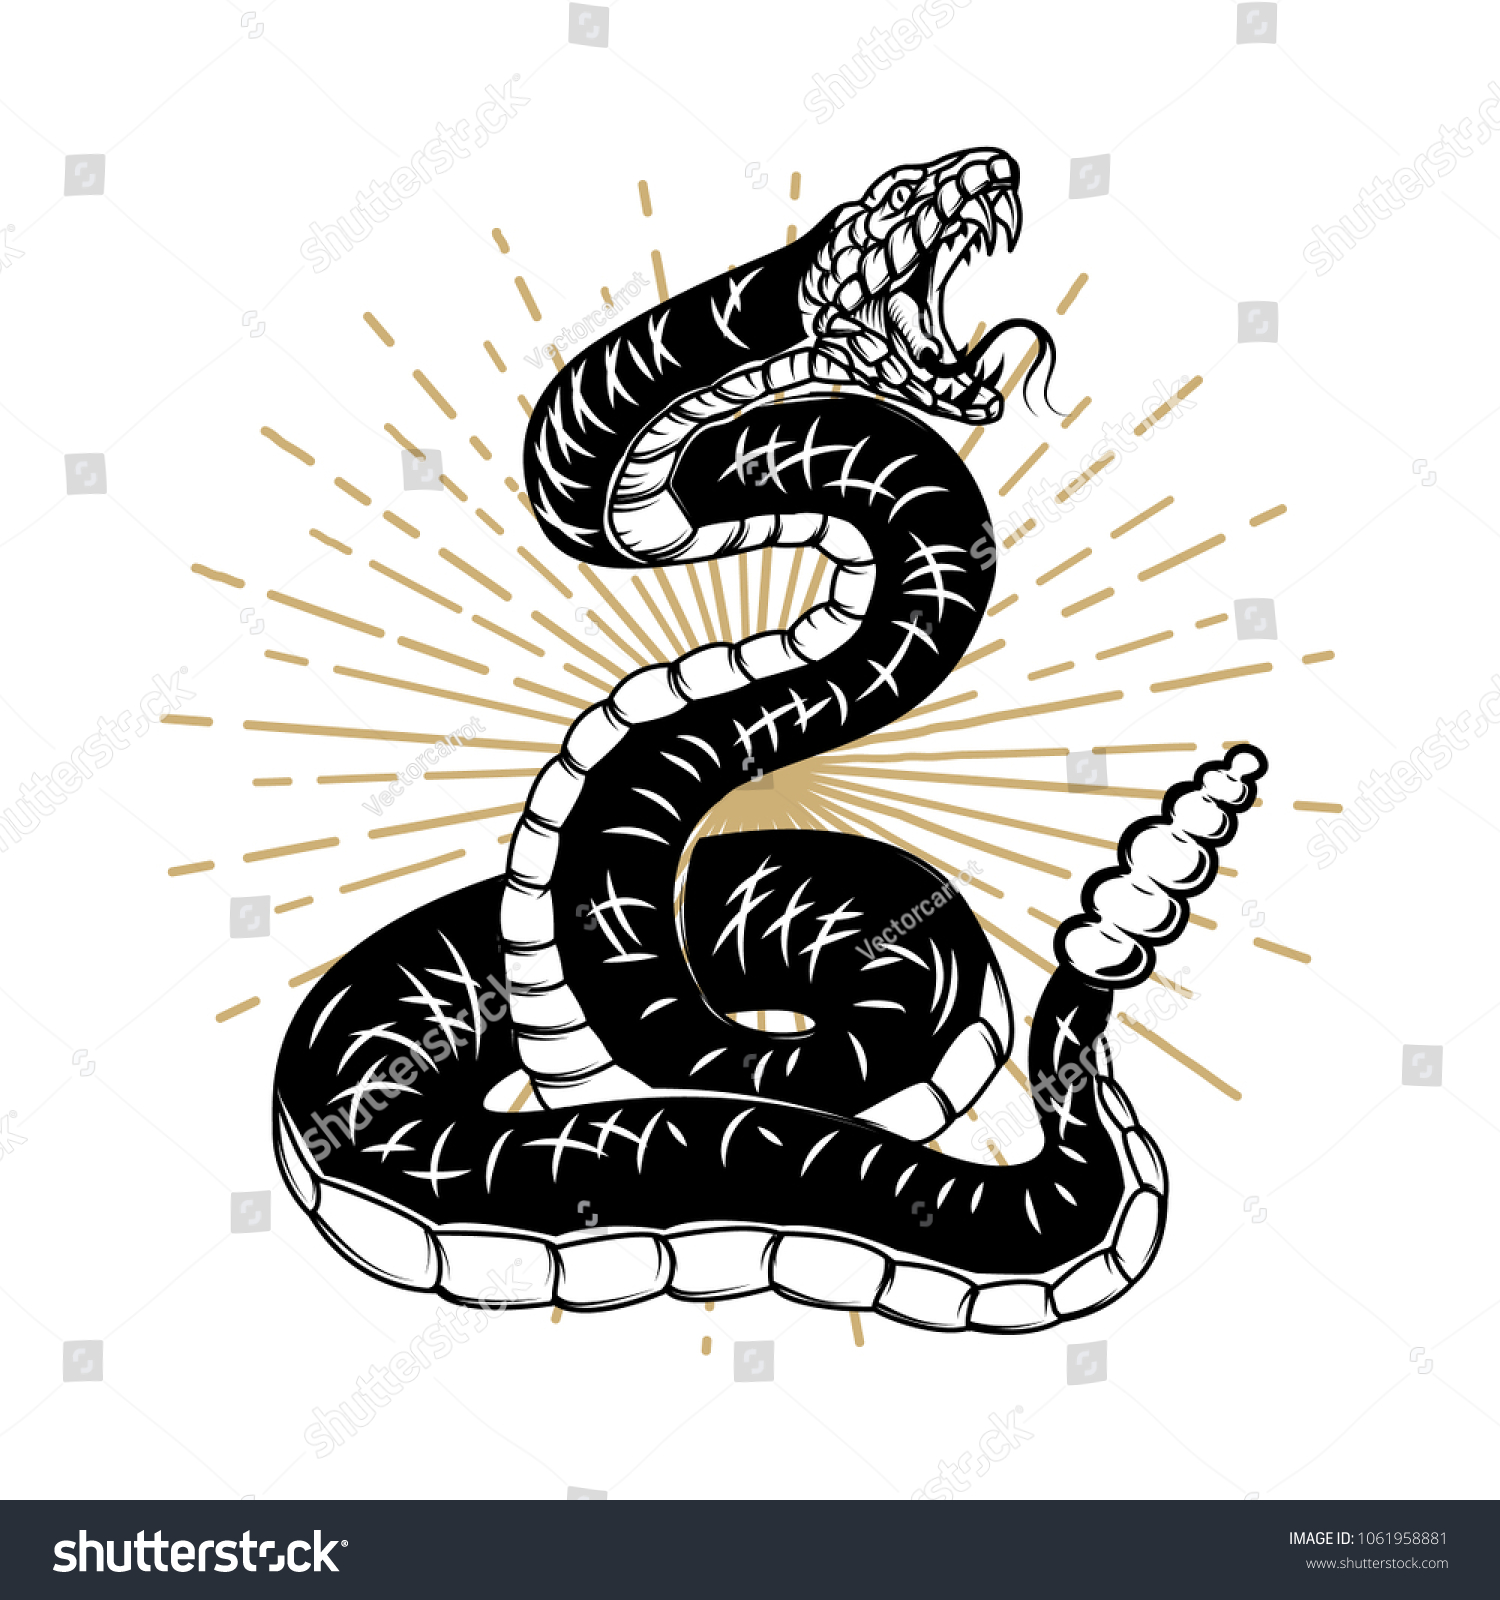 SVG of Snake illustration isolated on white background. Design element for poster, banner, t shirt. Vector illustration svg